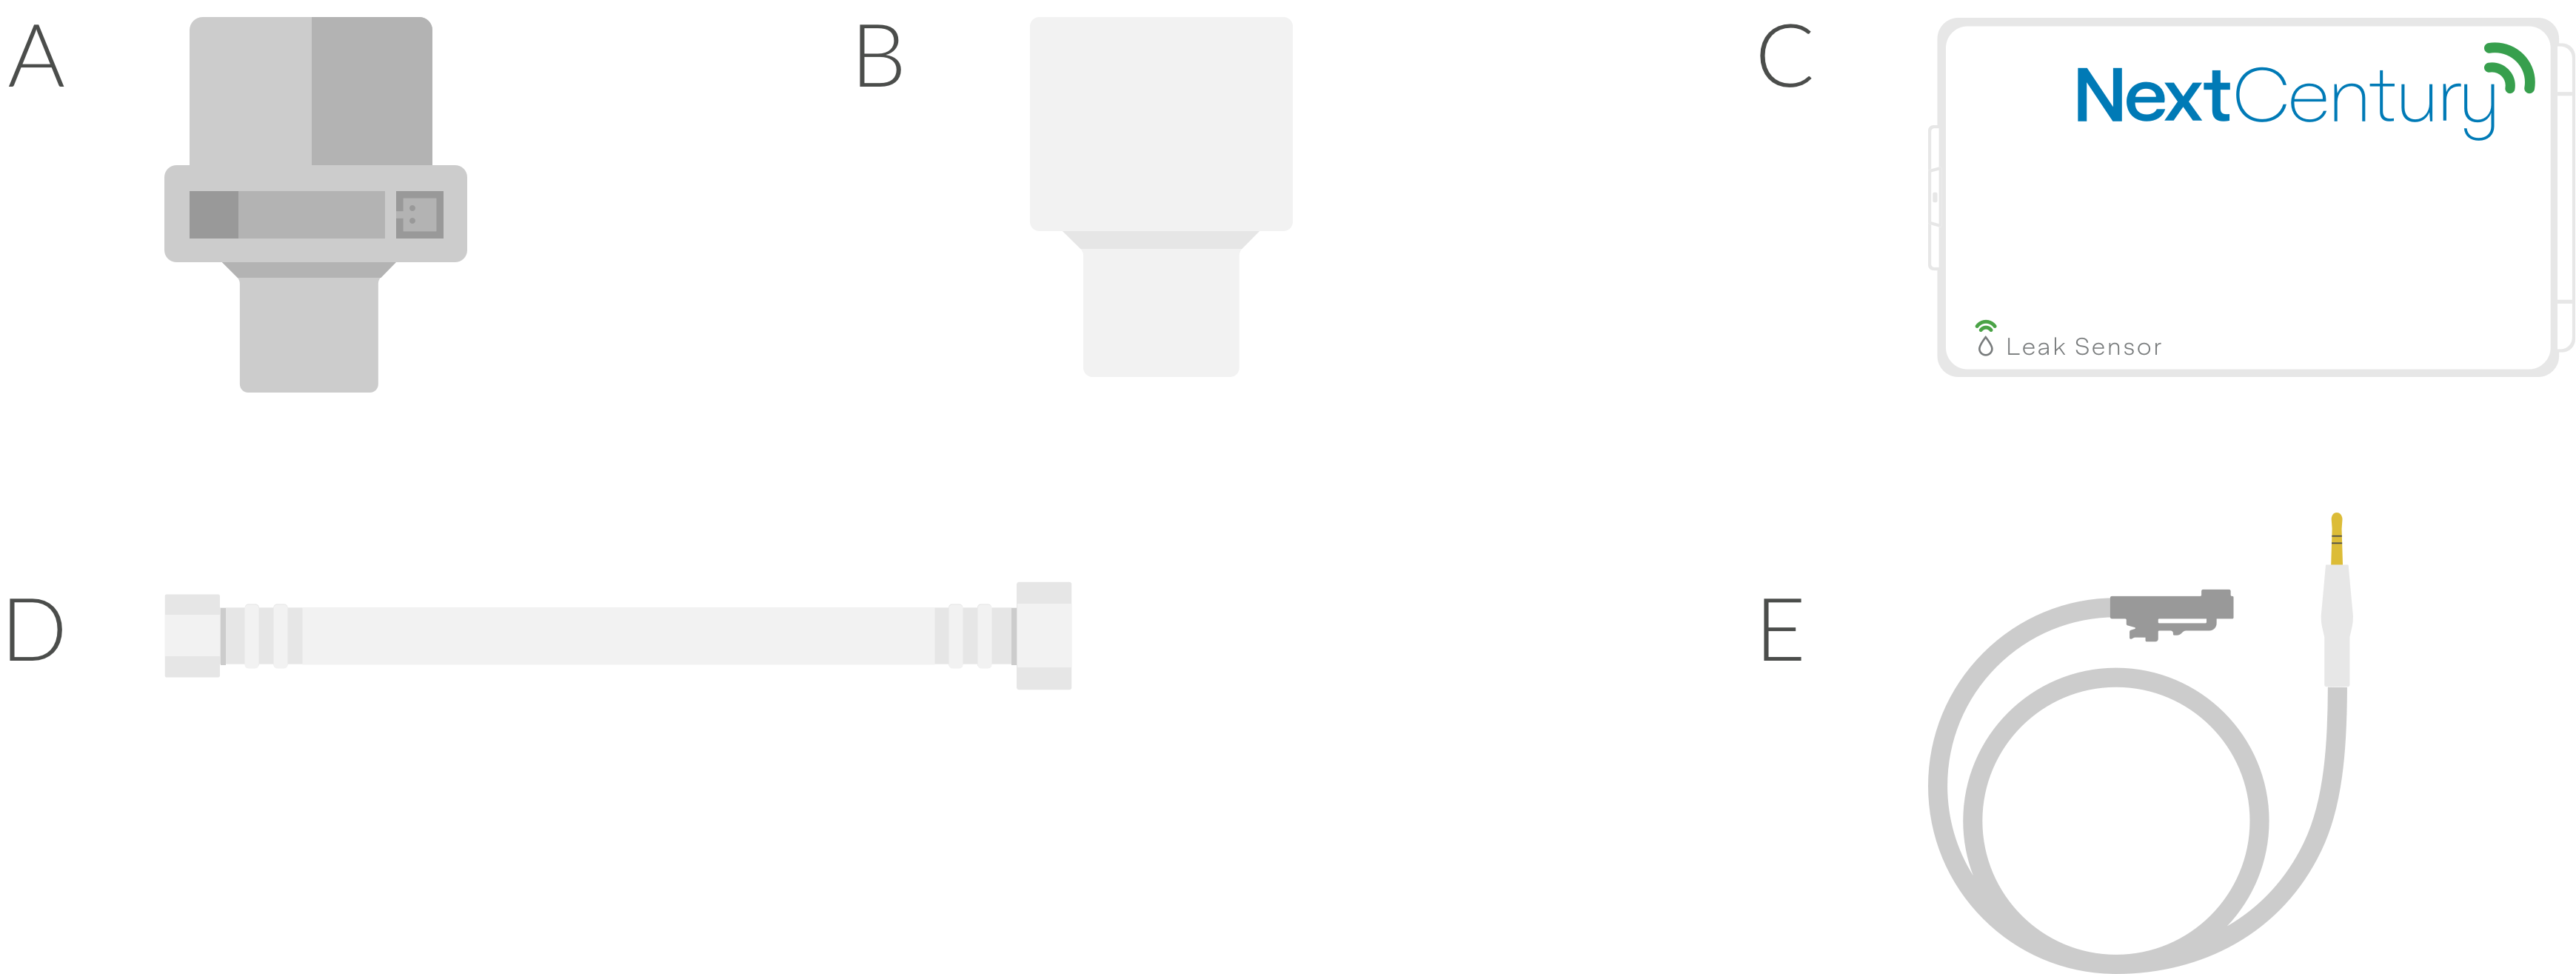 Toilet-Leak-Sensor-Installation-Components.png